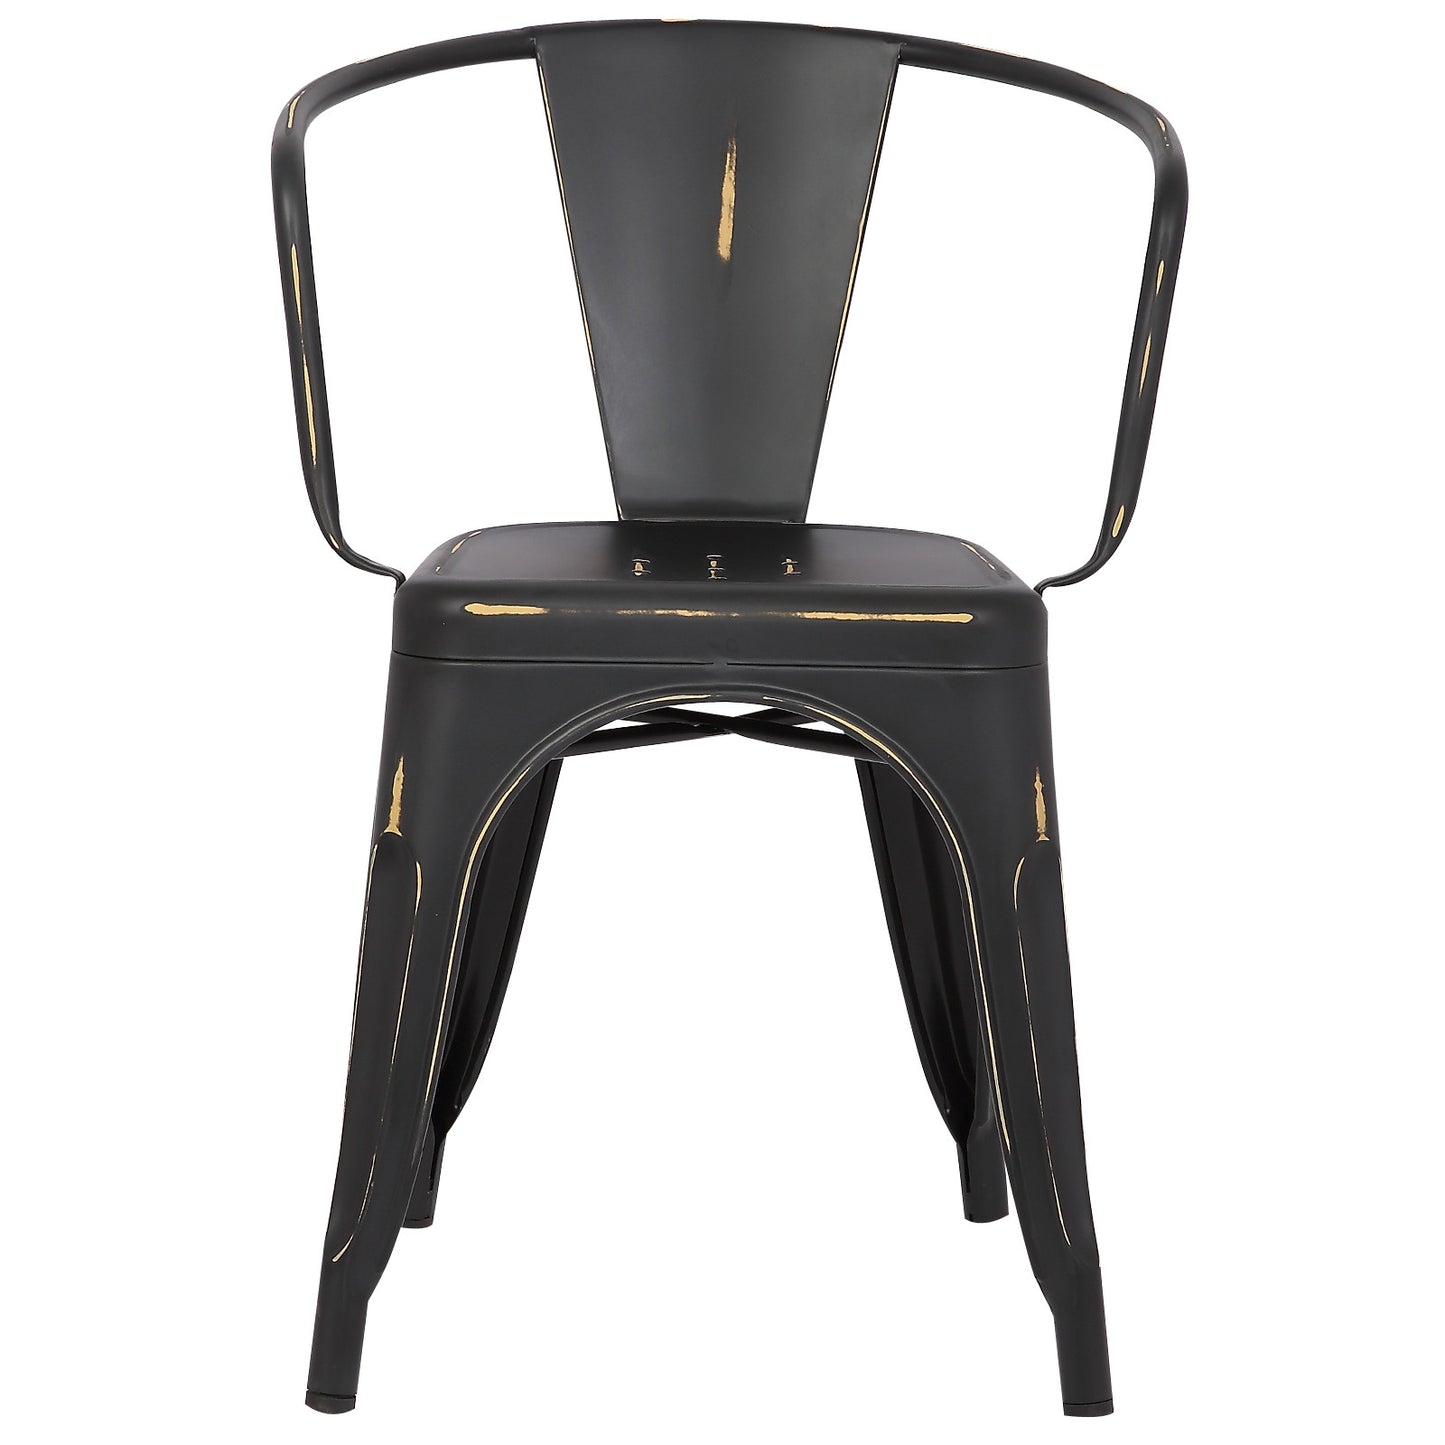 EdgeMod Trattoria Arm Chair  - Set Of 4